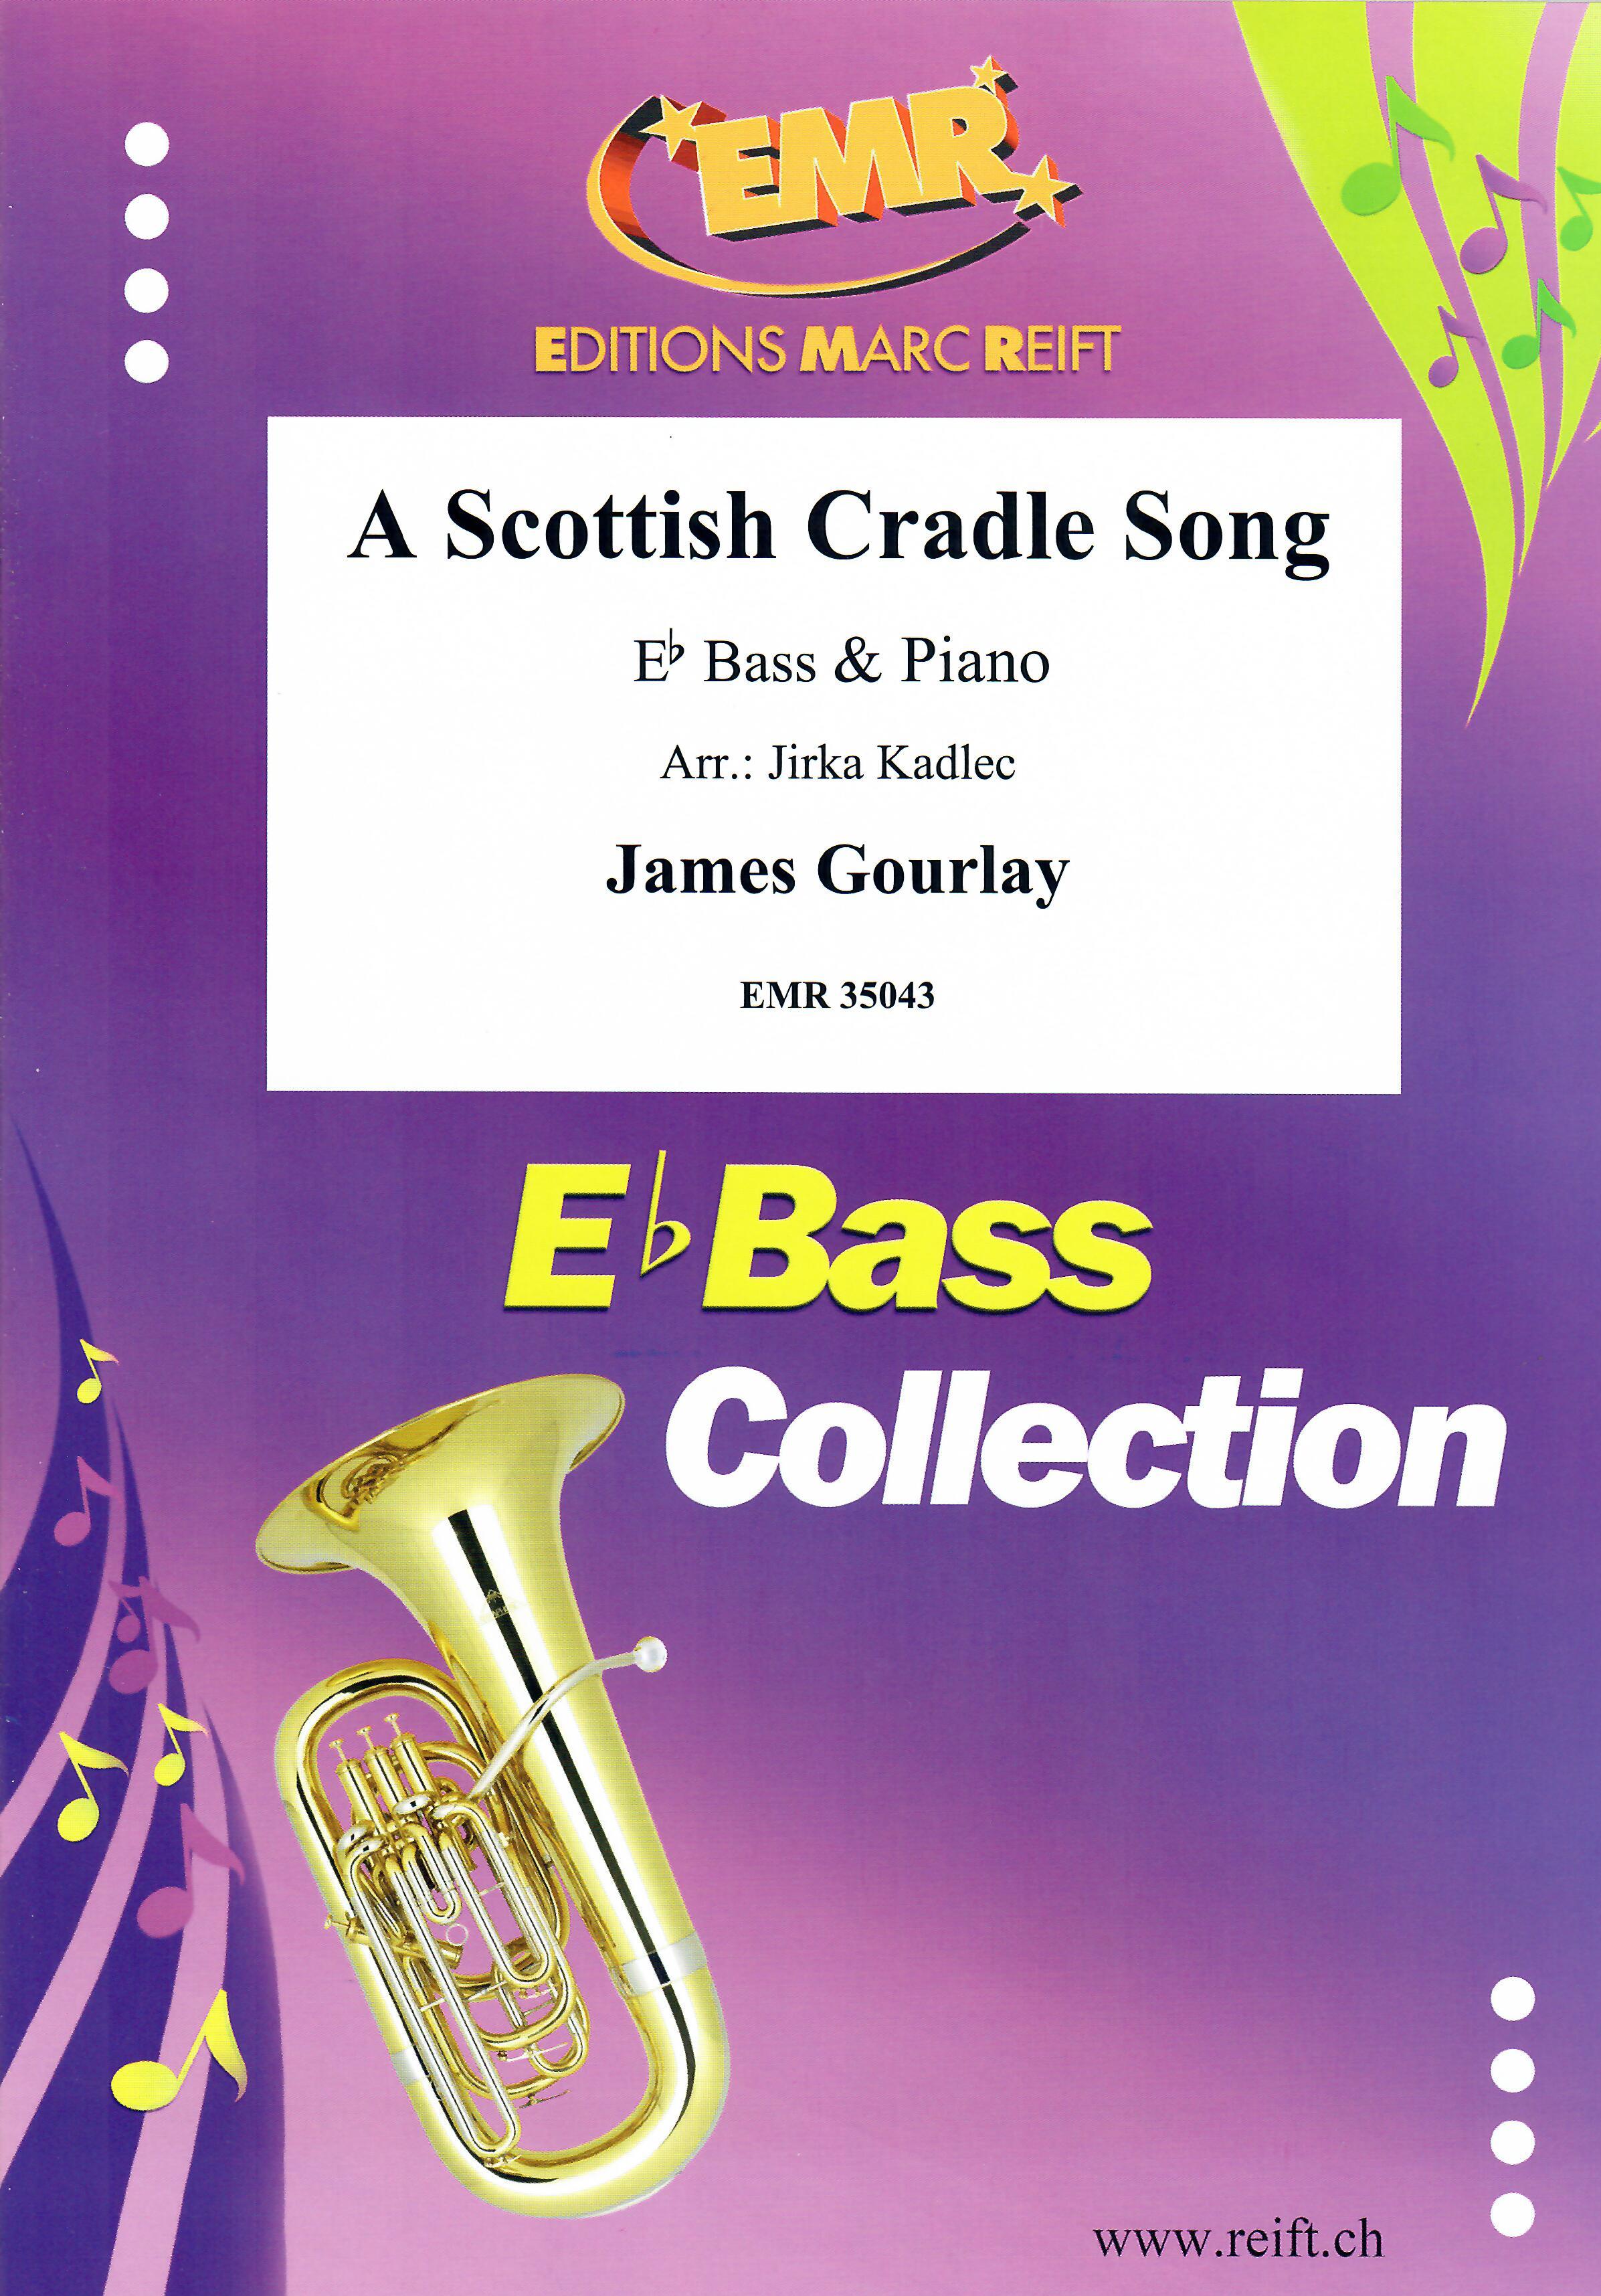 A SCOTTISH CRADLE SONG, SOLOS - E♭. Bass